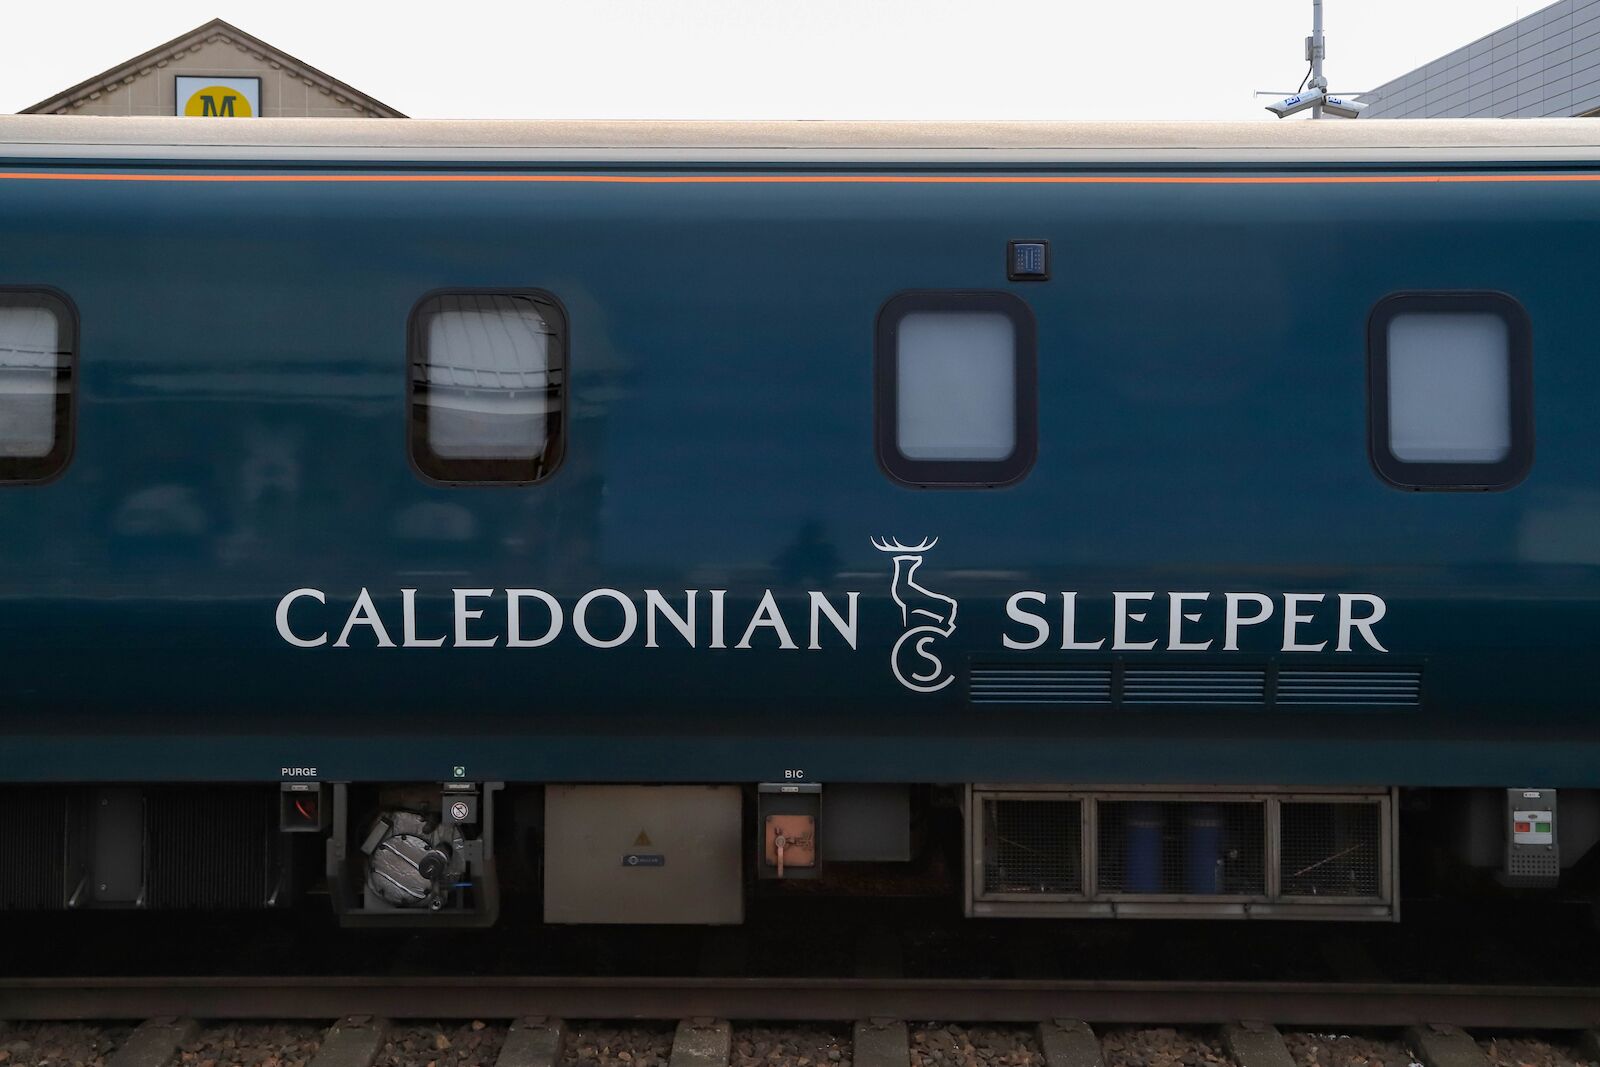 Car on the Caledonian Sleeper, the London to Scotland sleeper train